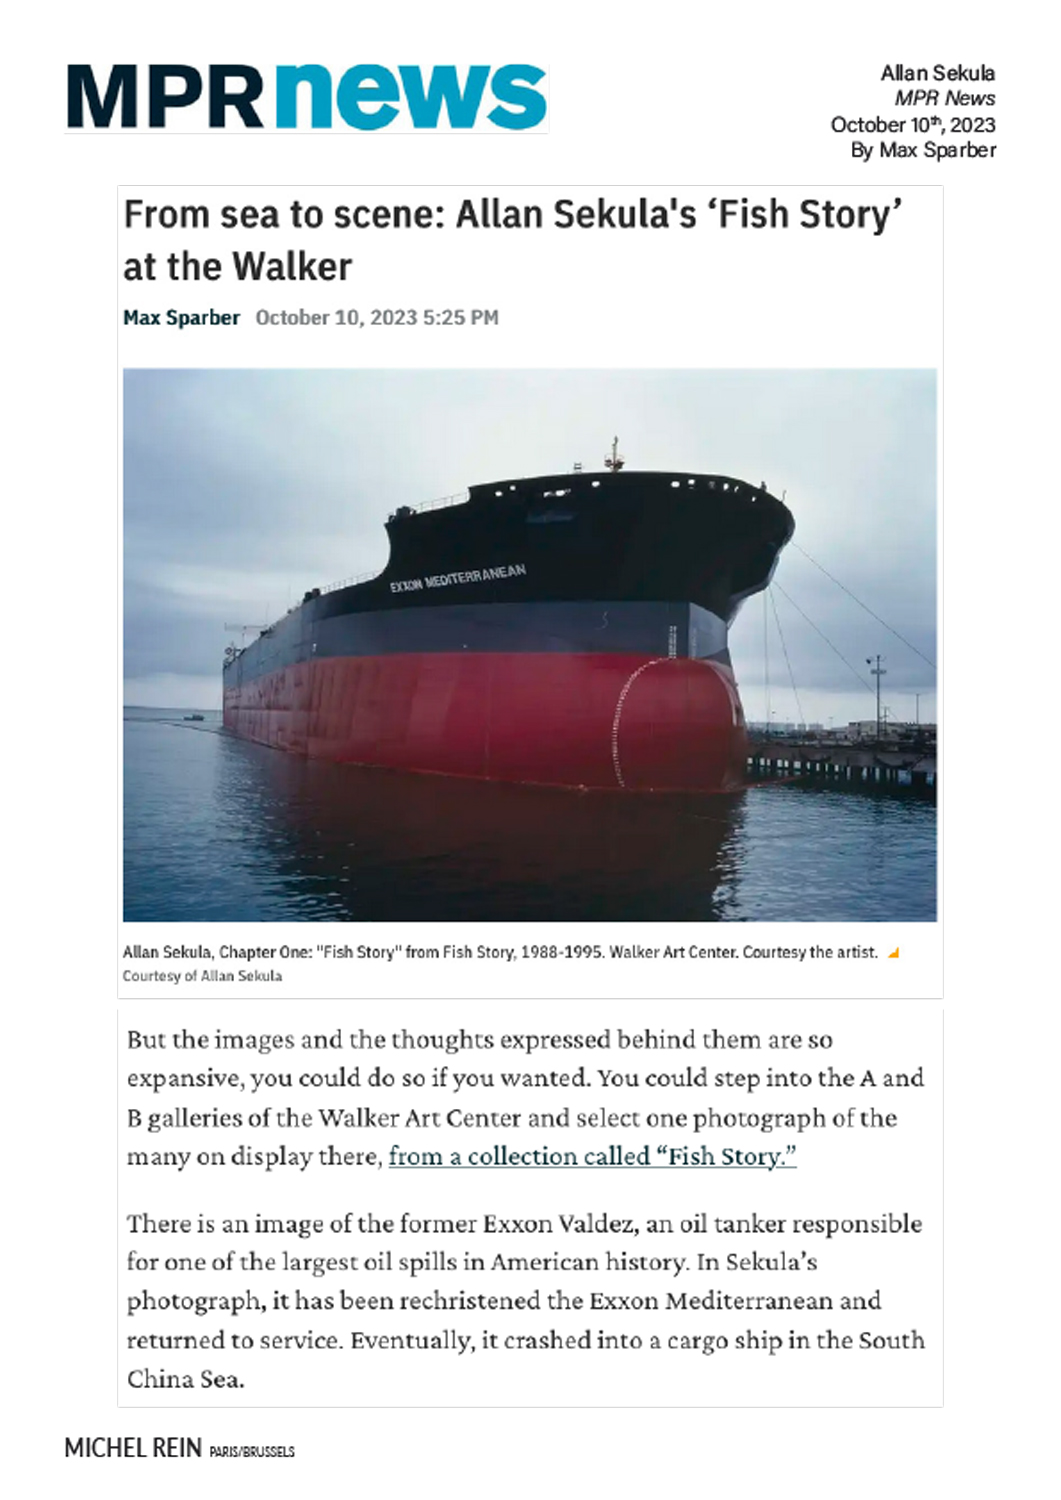 From sea to scene: Allan Sekula's 'Fish Story' at the Walker - MPR News